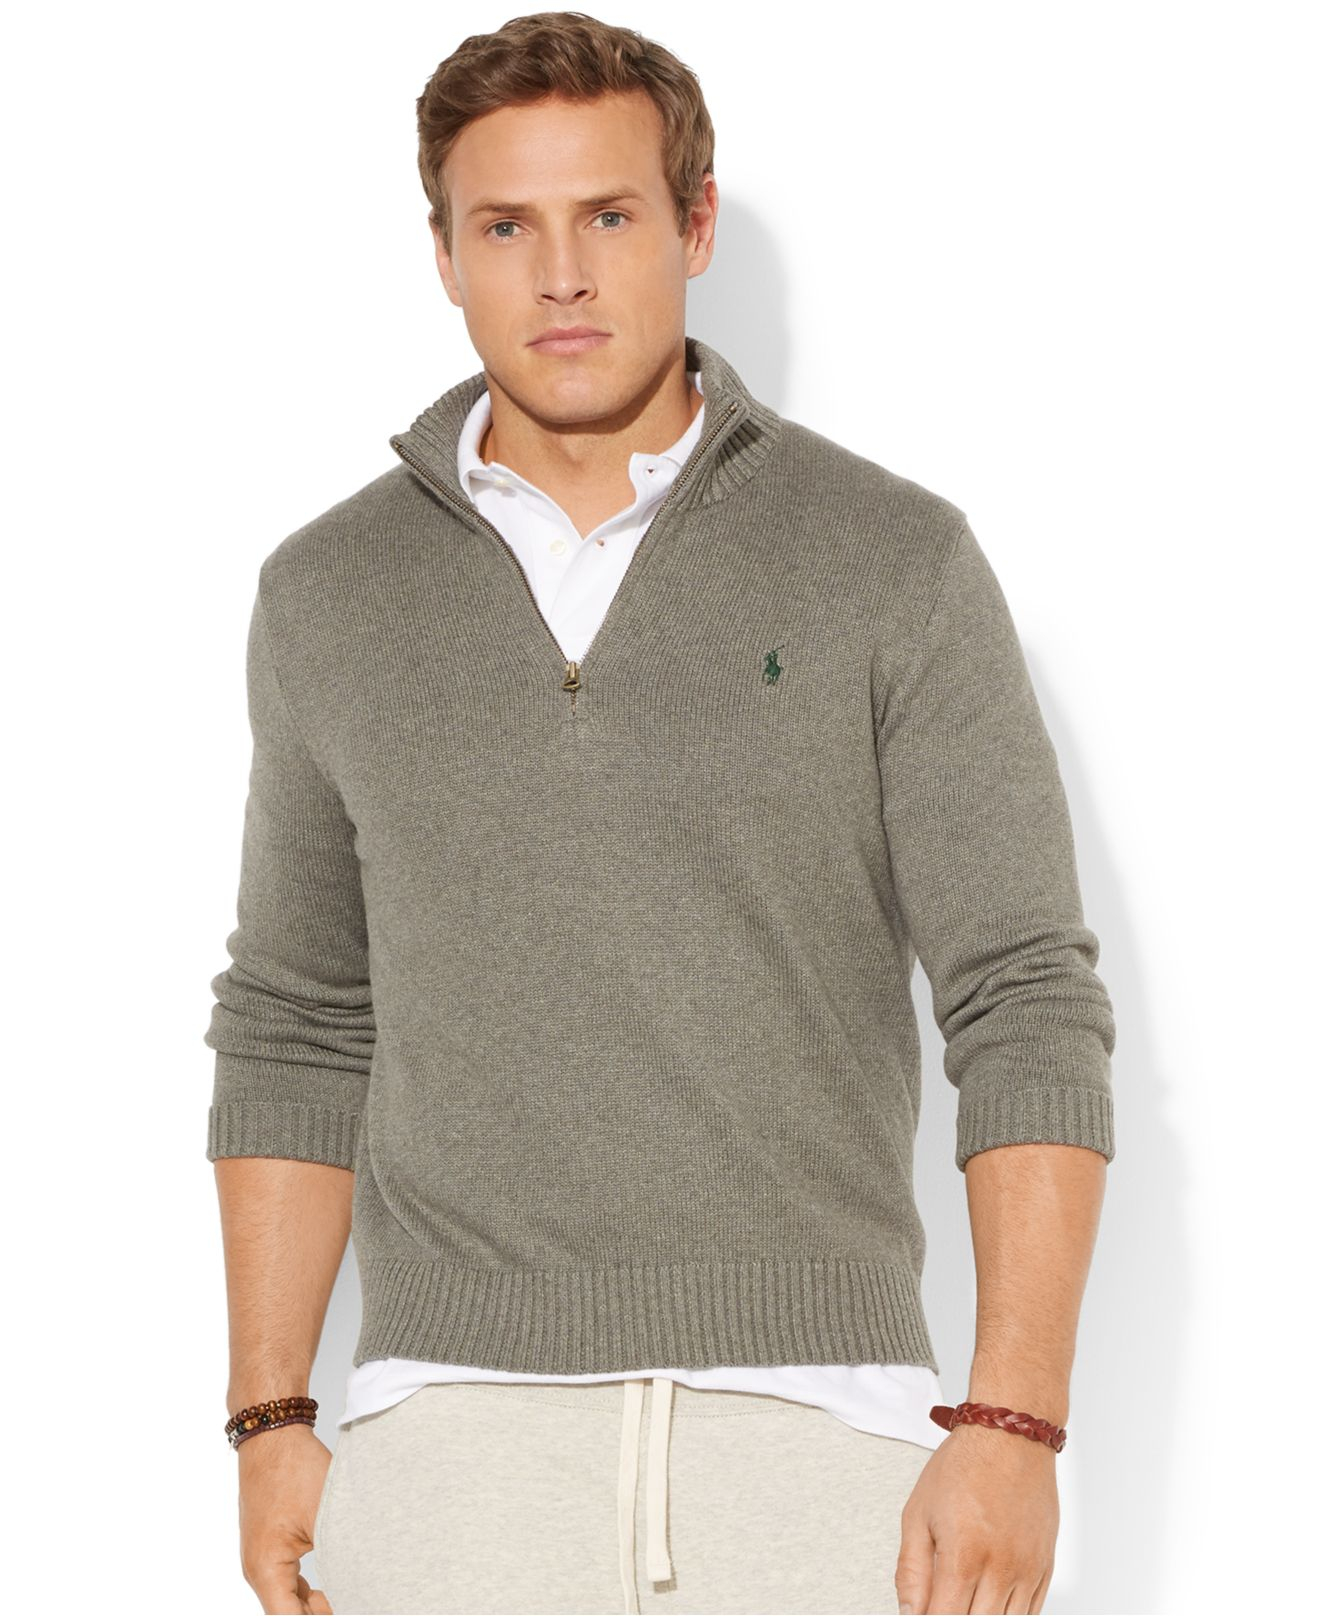 Lyst - Polo Ralph Lauren Big And Tall Half-Zip Mockneck Sweater in Gray ...